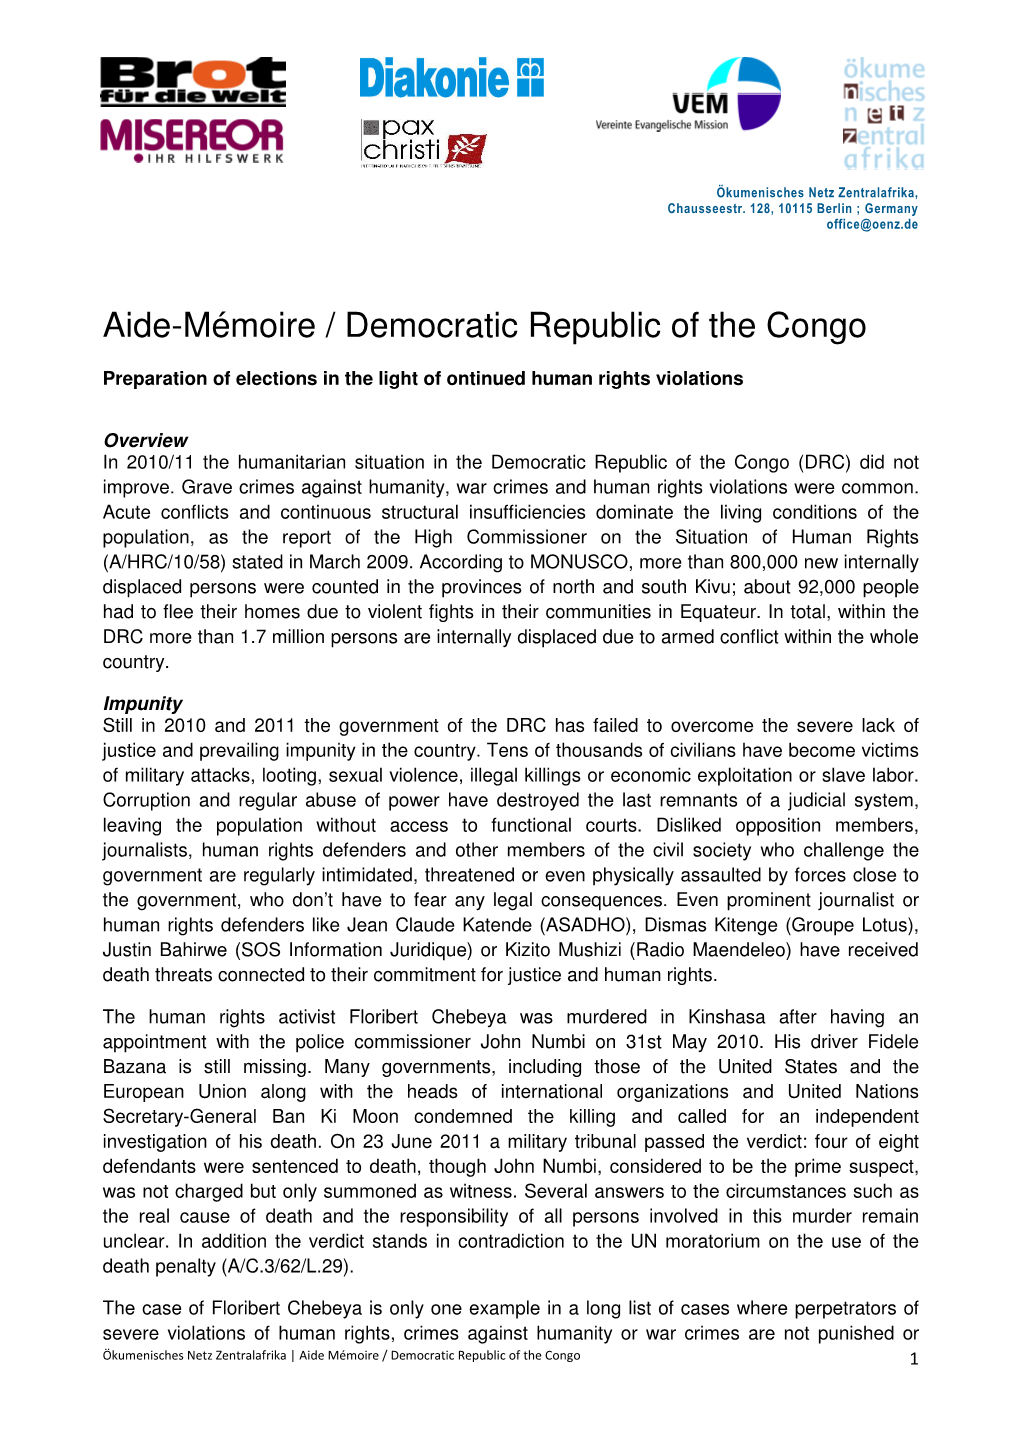 Aide-Mémoire / Democratic Republic of the Congo